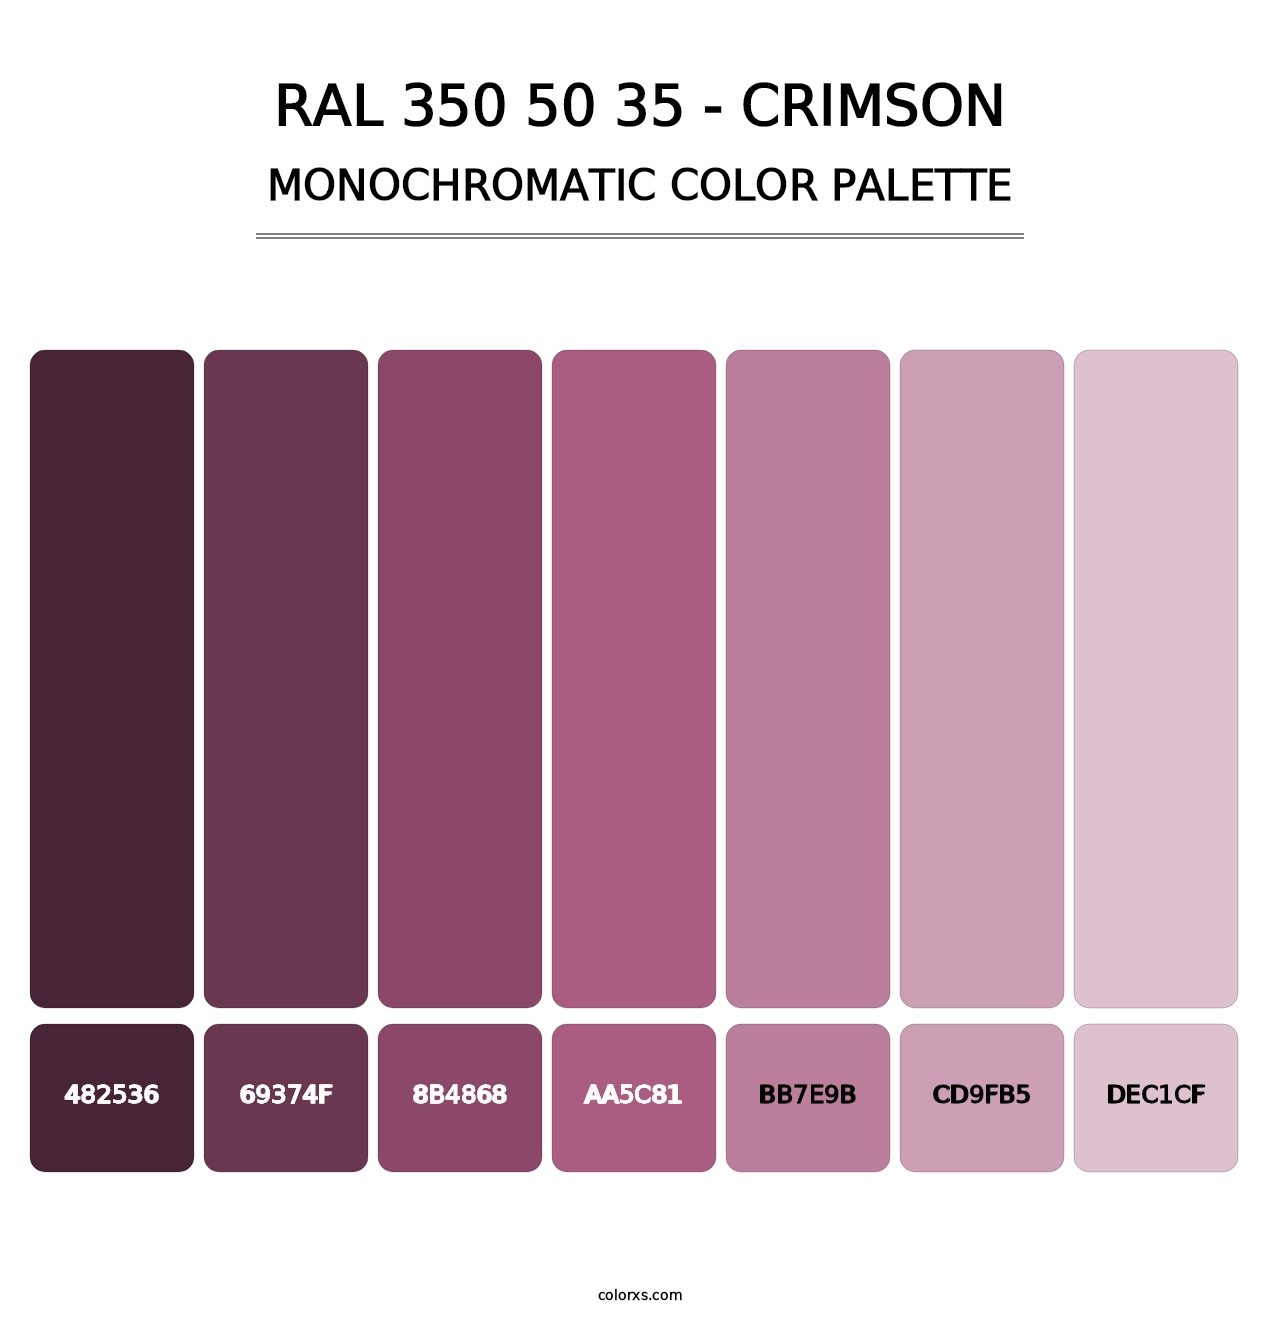 RAL 350 50 35 - Crimson - Monochromatic Color Palette